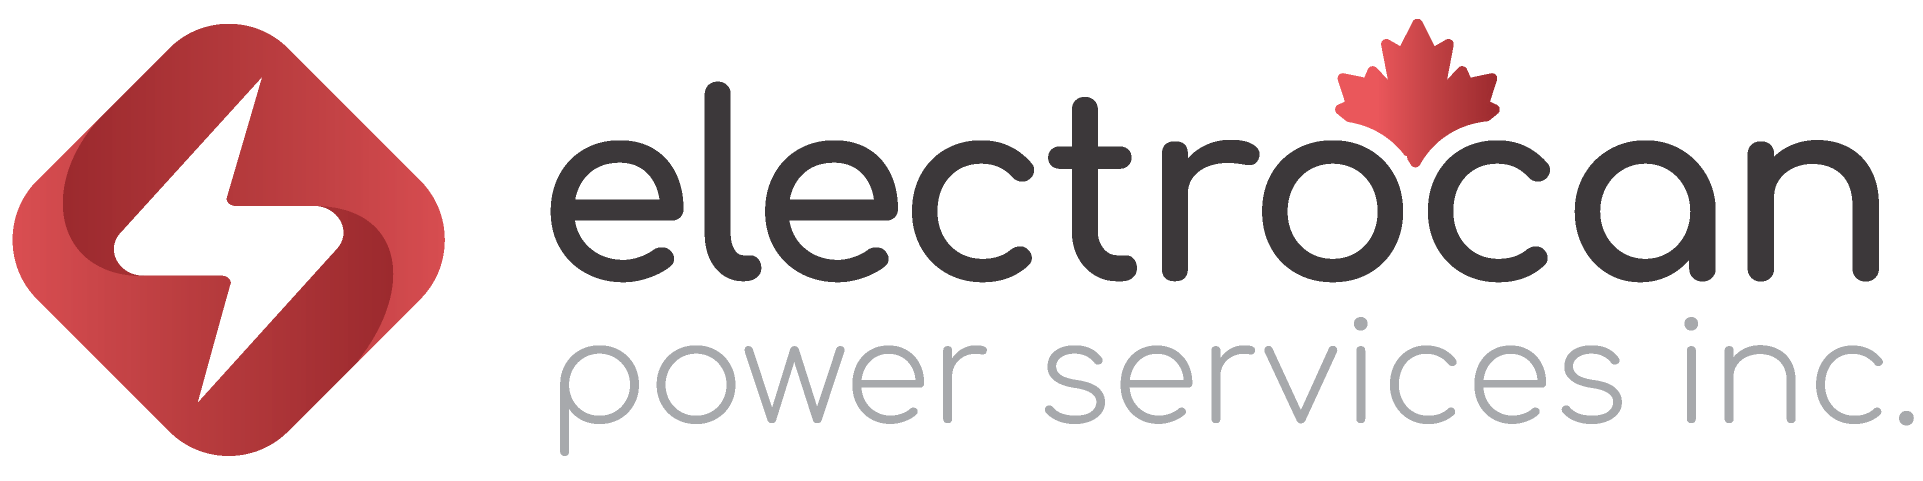 Electrocan Power Services Inc.'s logo